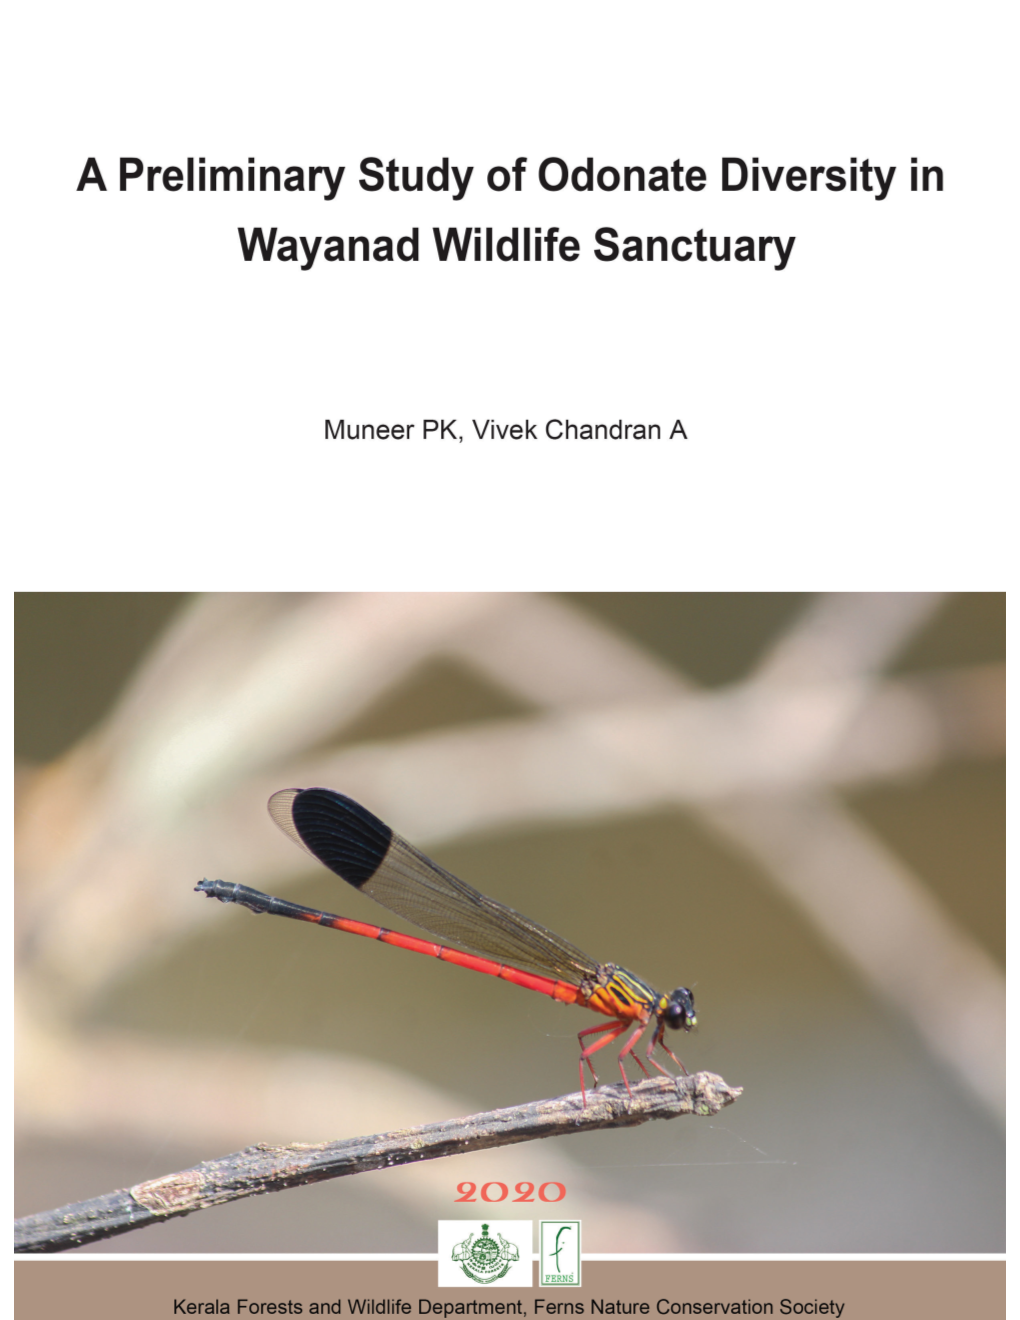 A Preliminary Study of Odonate Diversity in Wayanad Wildlife Sanctuary